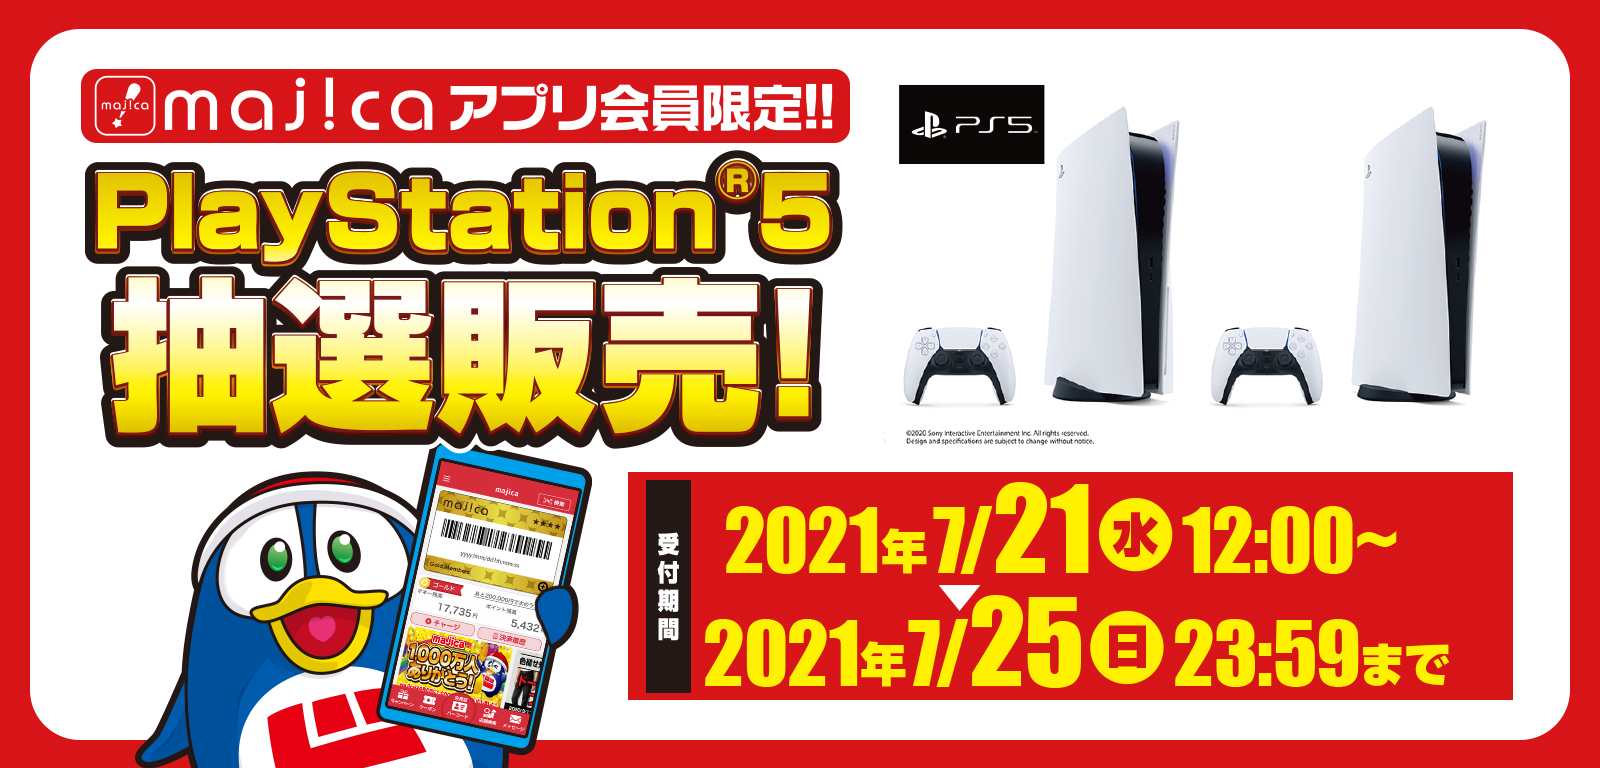 majicaアプリ会員限定！！PlayStation®5抽選販売！ 受付期間：2021年7月21日（水）12:00 ～ 2021年7月25日（日）23:59まで 